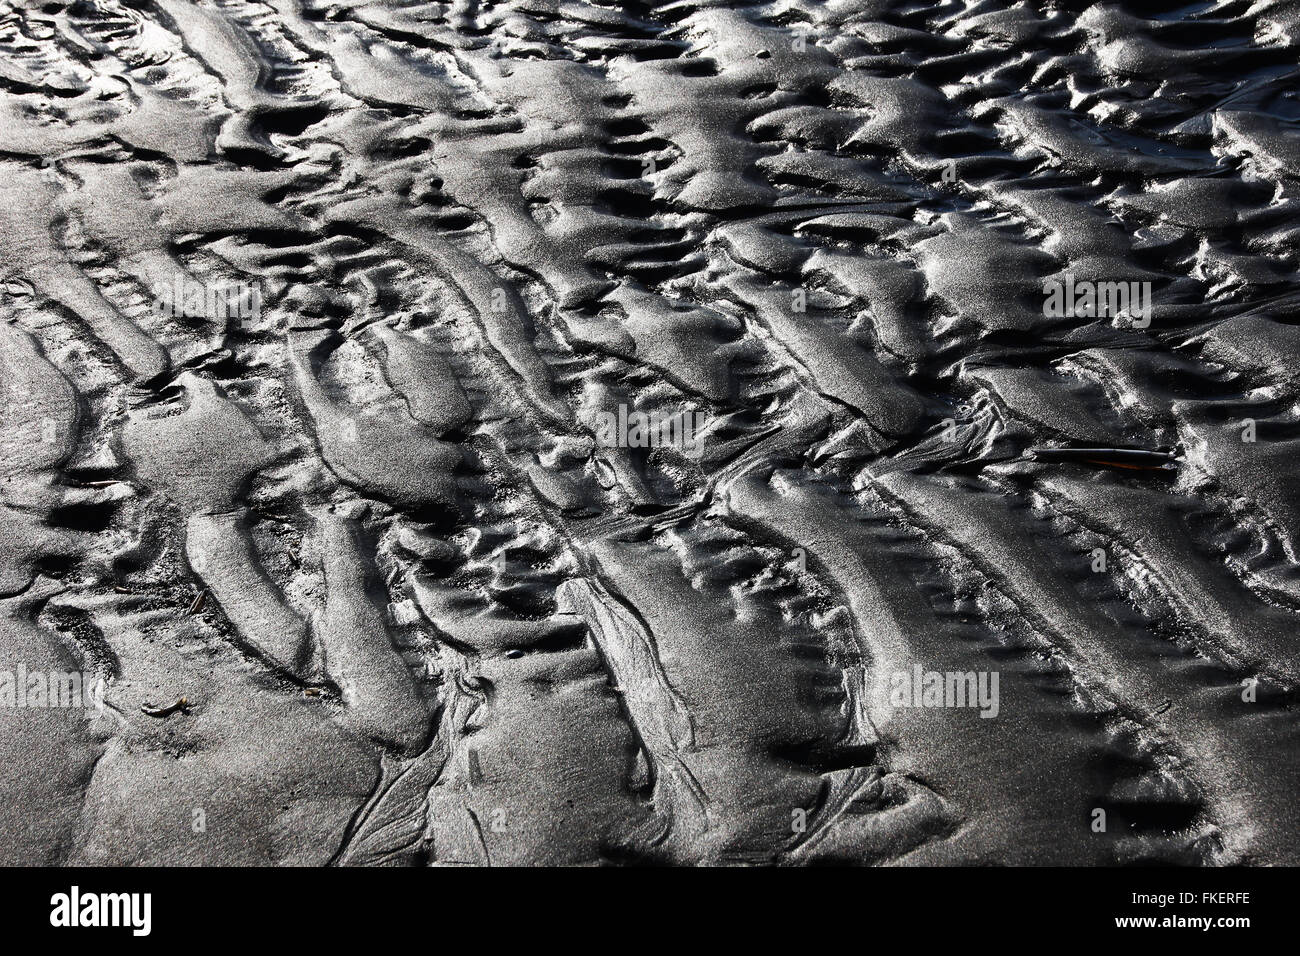 Wet sand, Watt, low tide, Goeree-Overflakkee, South Holland province, North Sea Coast, Zeeland province, The Netherlands Stock Photo